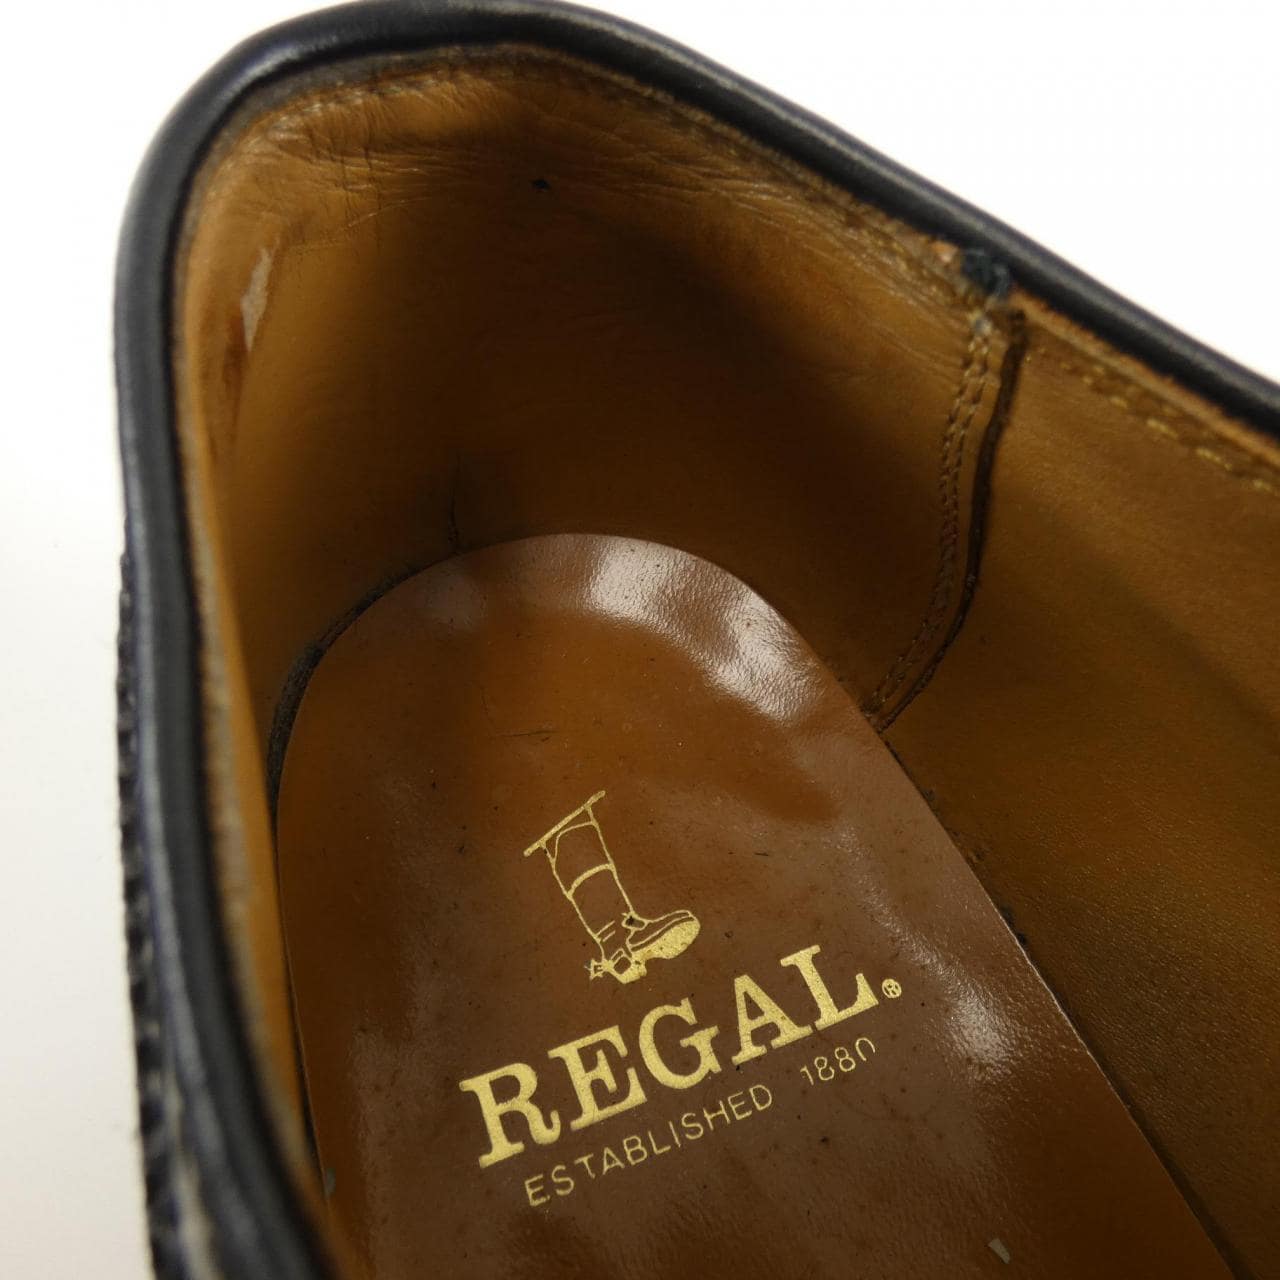 Regal REGAL shoes